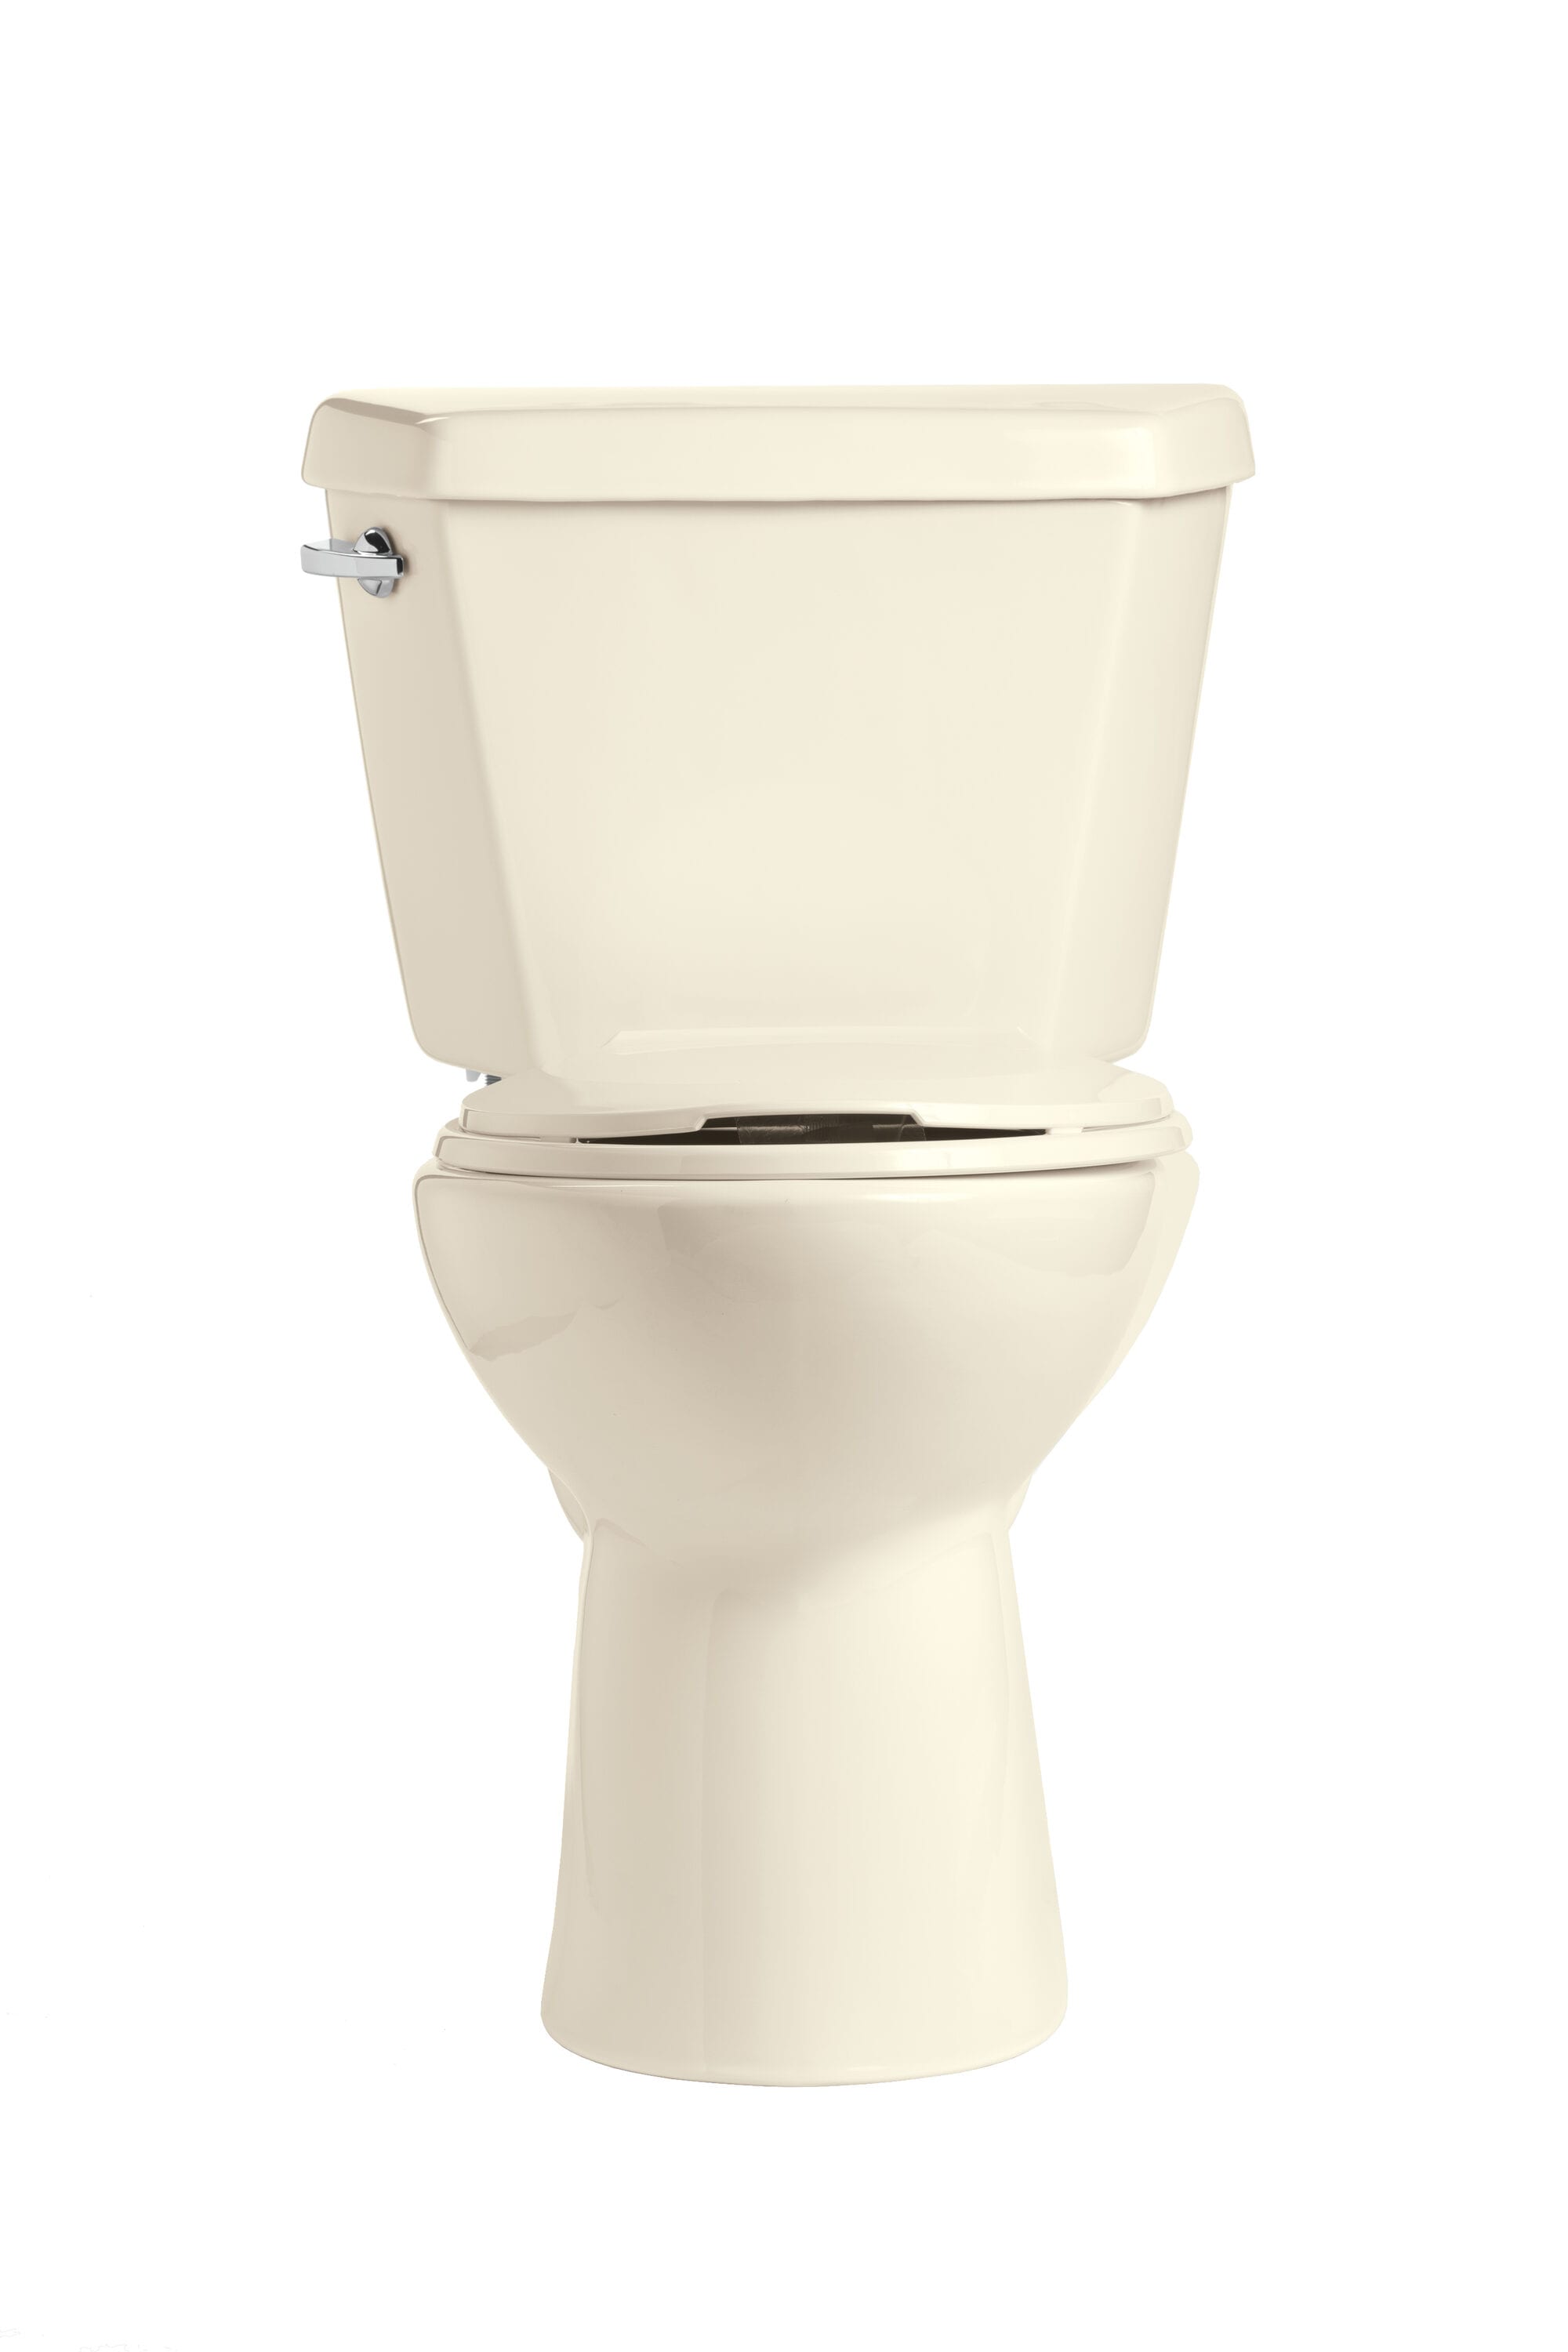 Mansfield Denali Bone Elongated Chair Height 2-piece WaterSense Soft Close Toilet 12-in Rough-In 1.28-GPF